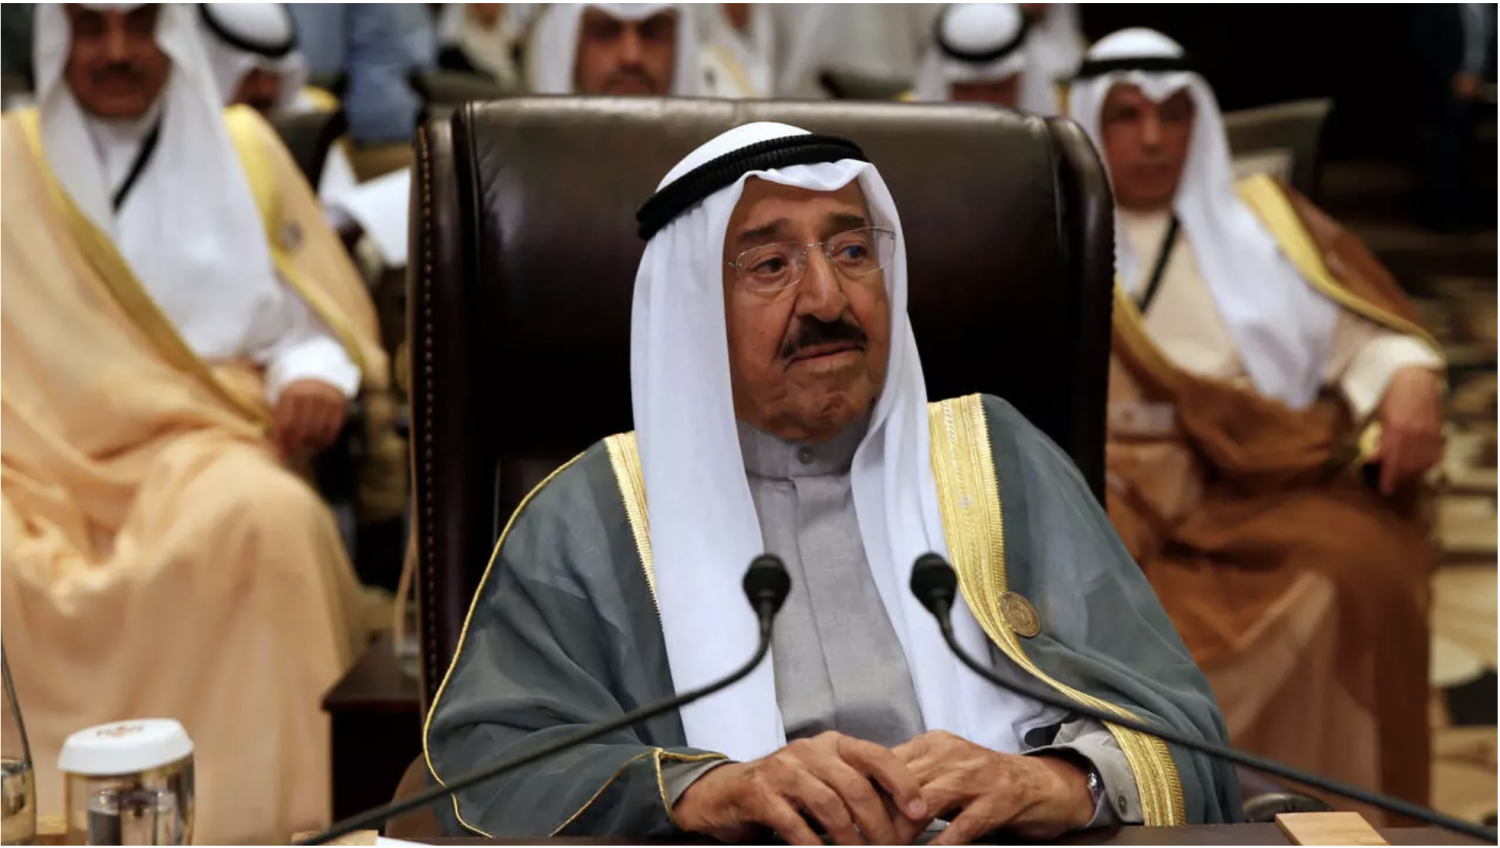 Emir of Kuwait Sabah Al-Ahmad Al-Jaber Al-Sabah attends the 28th Ordinary Summit of the Arab League at the Dead Sea, Jordan March 29, 2017. © Muhammad Hamed, Reuters